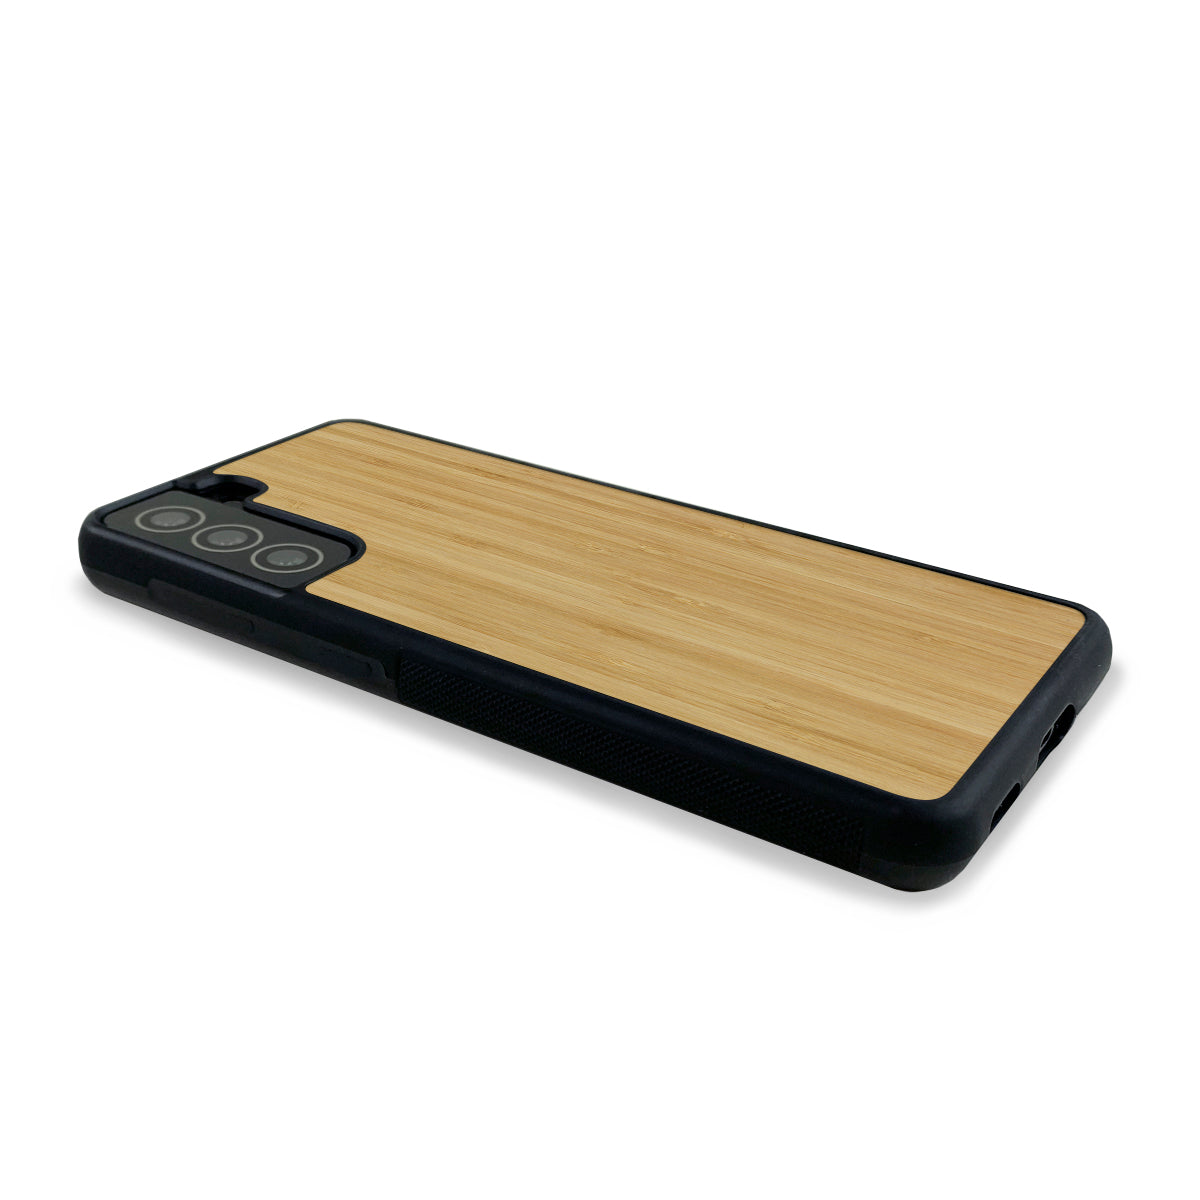 Samsung Galaxy S21 —  #WoodBack Explorer Case